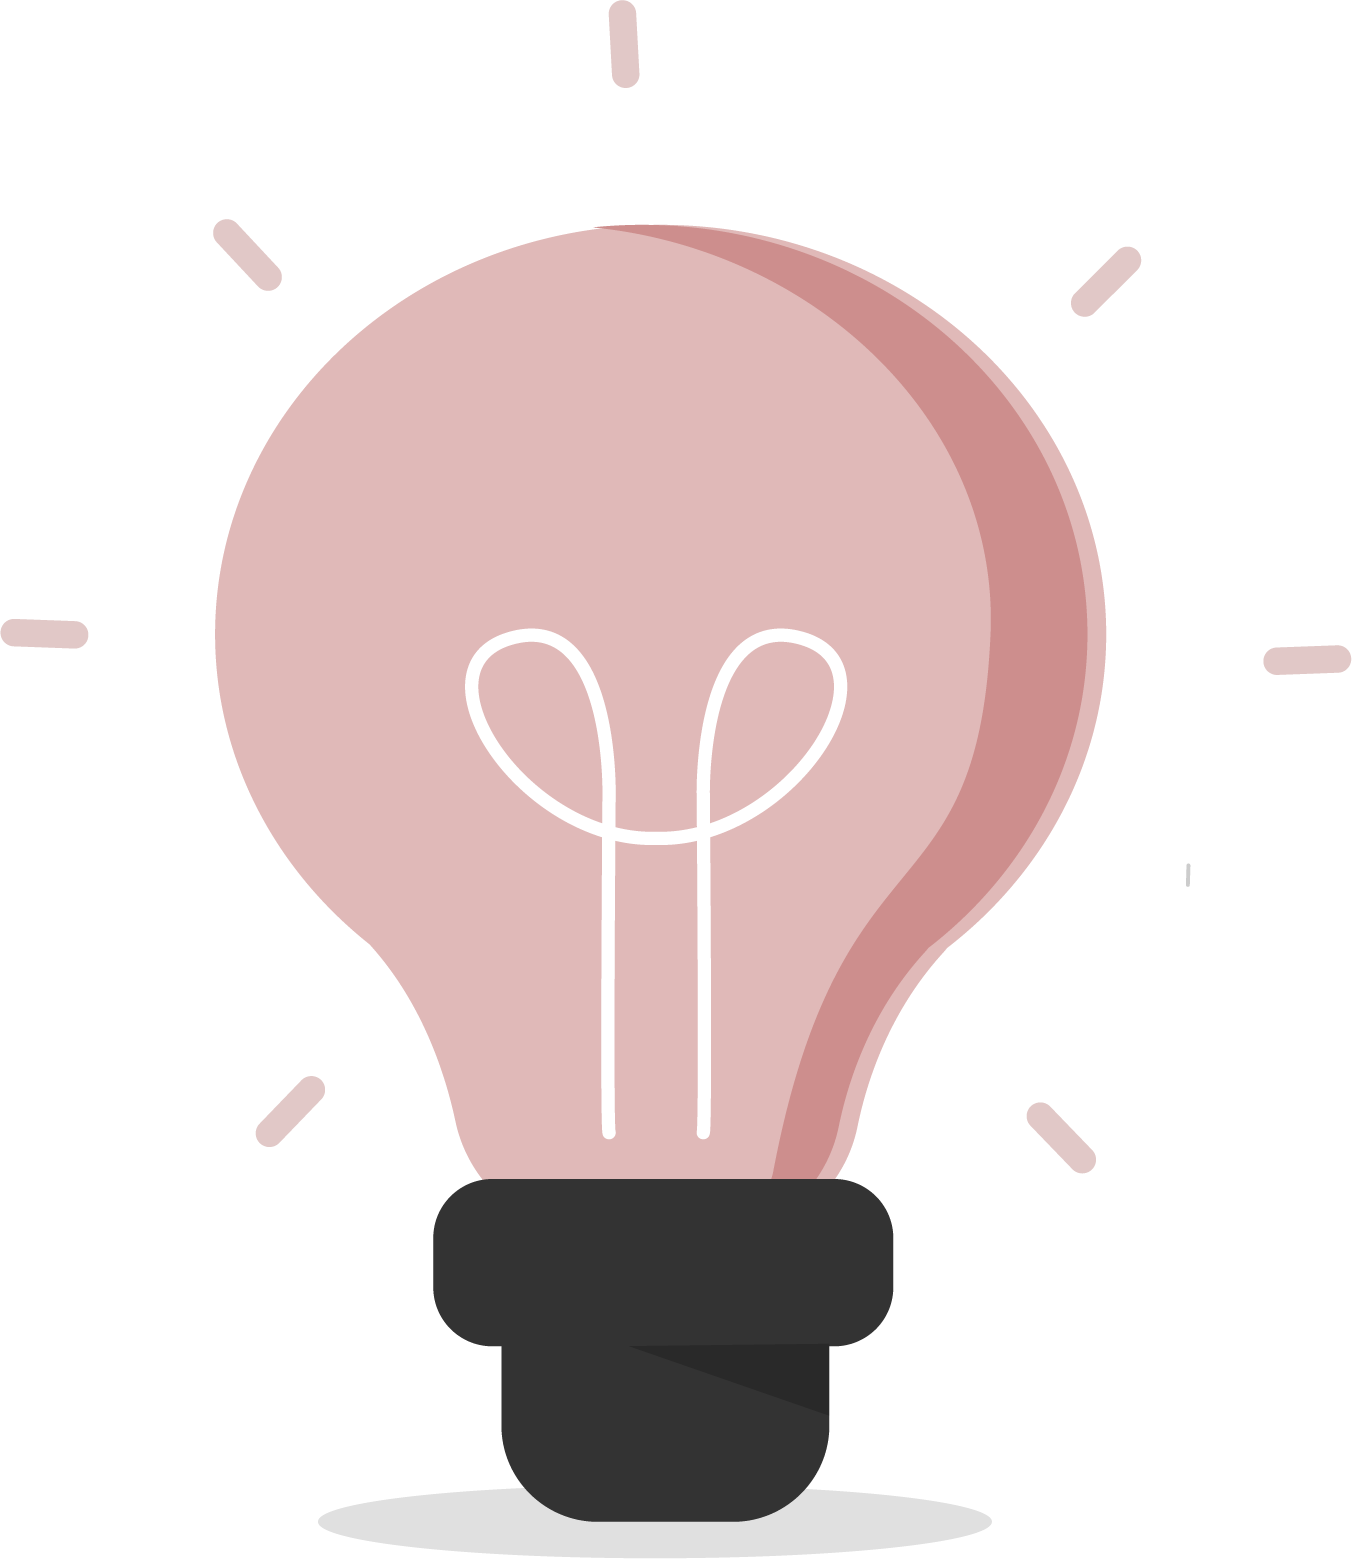 Vector illustration of a pink light bulb.